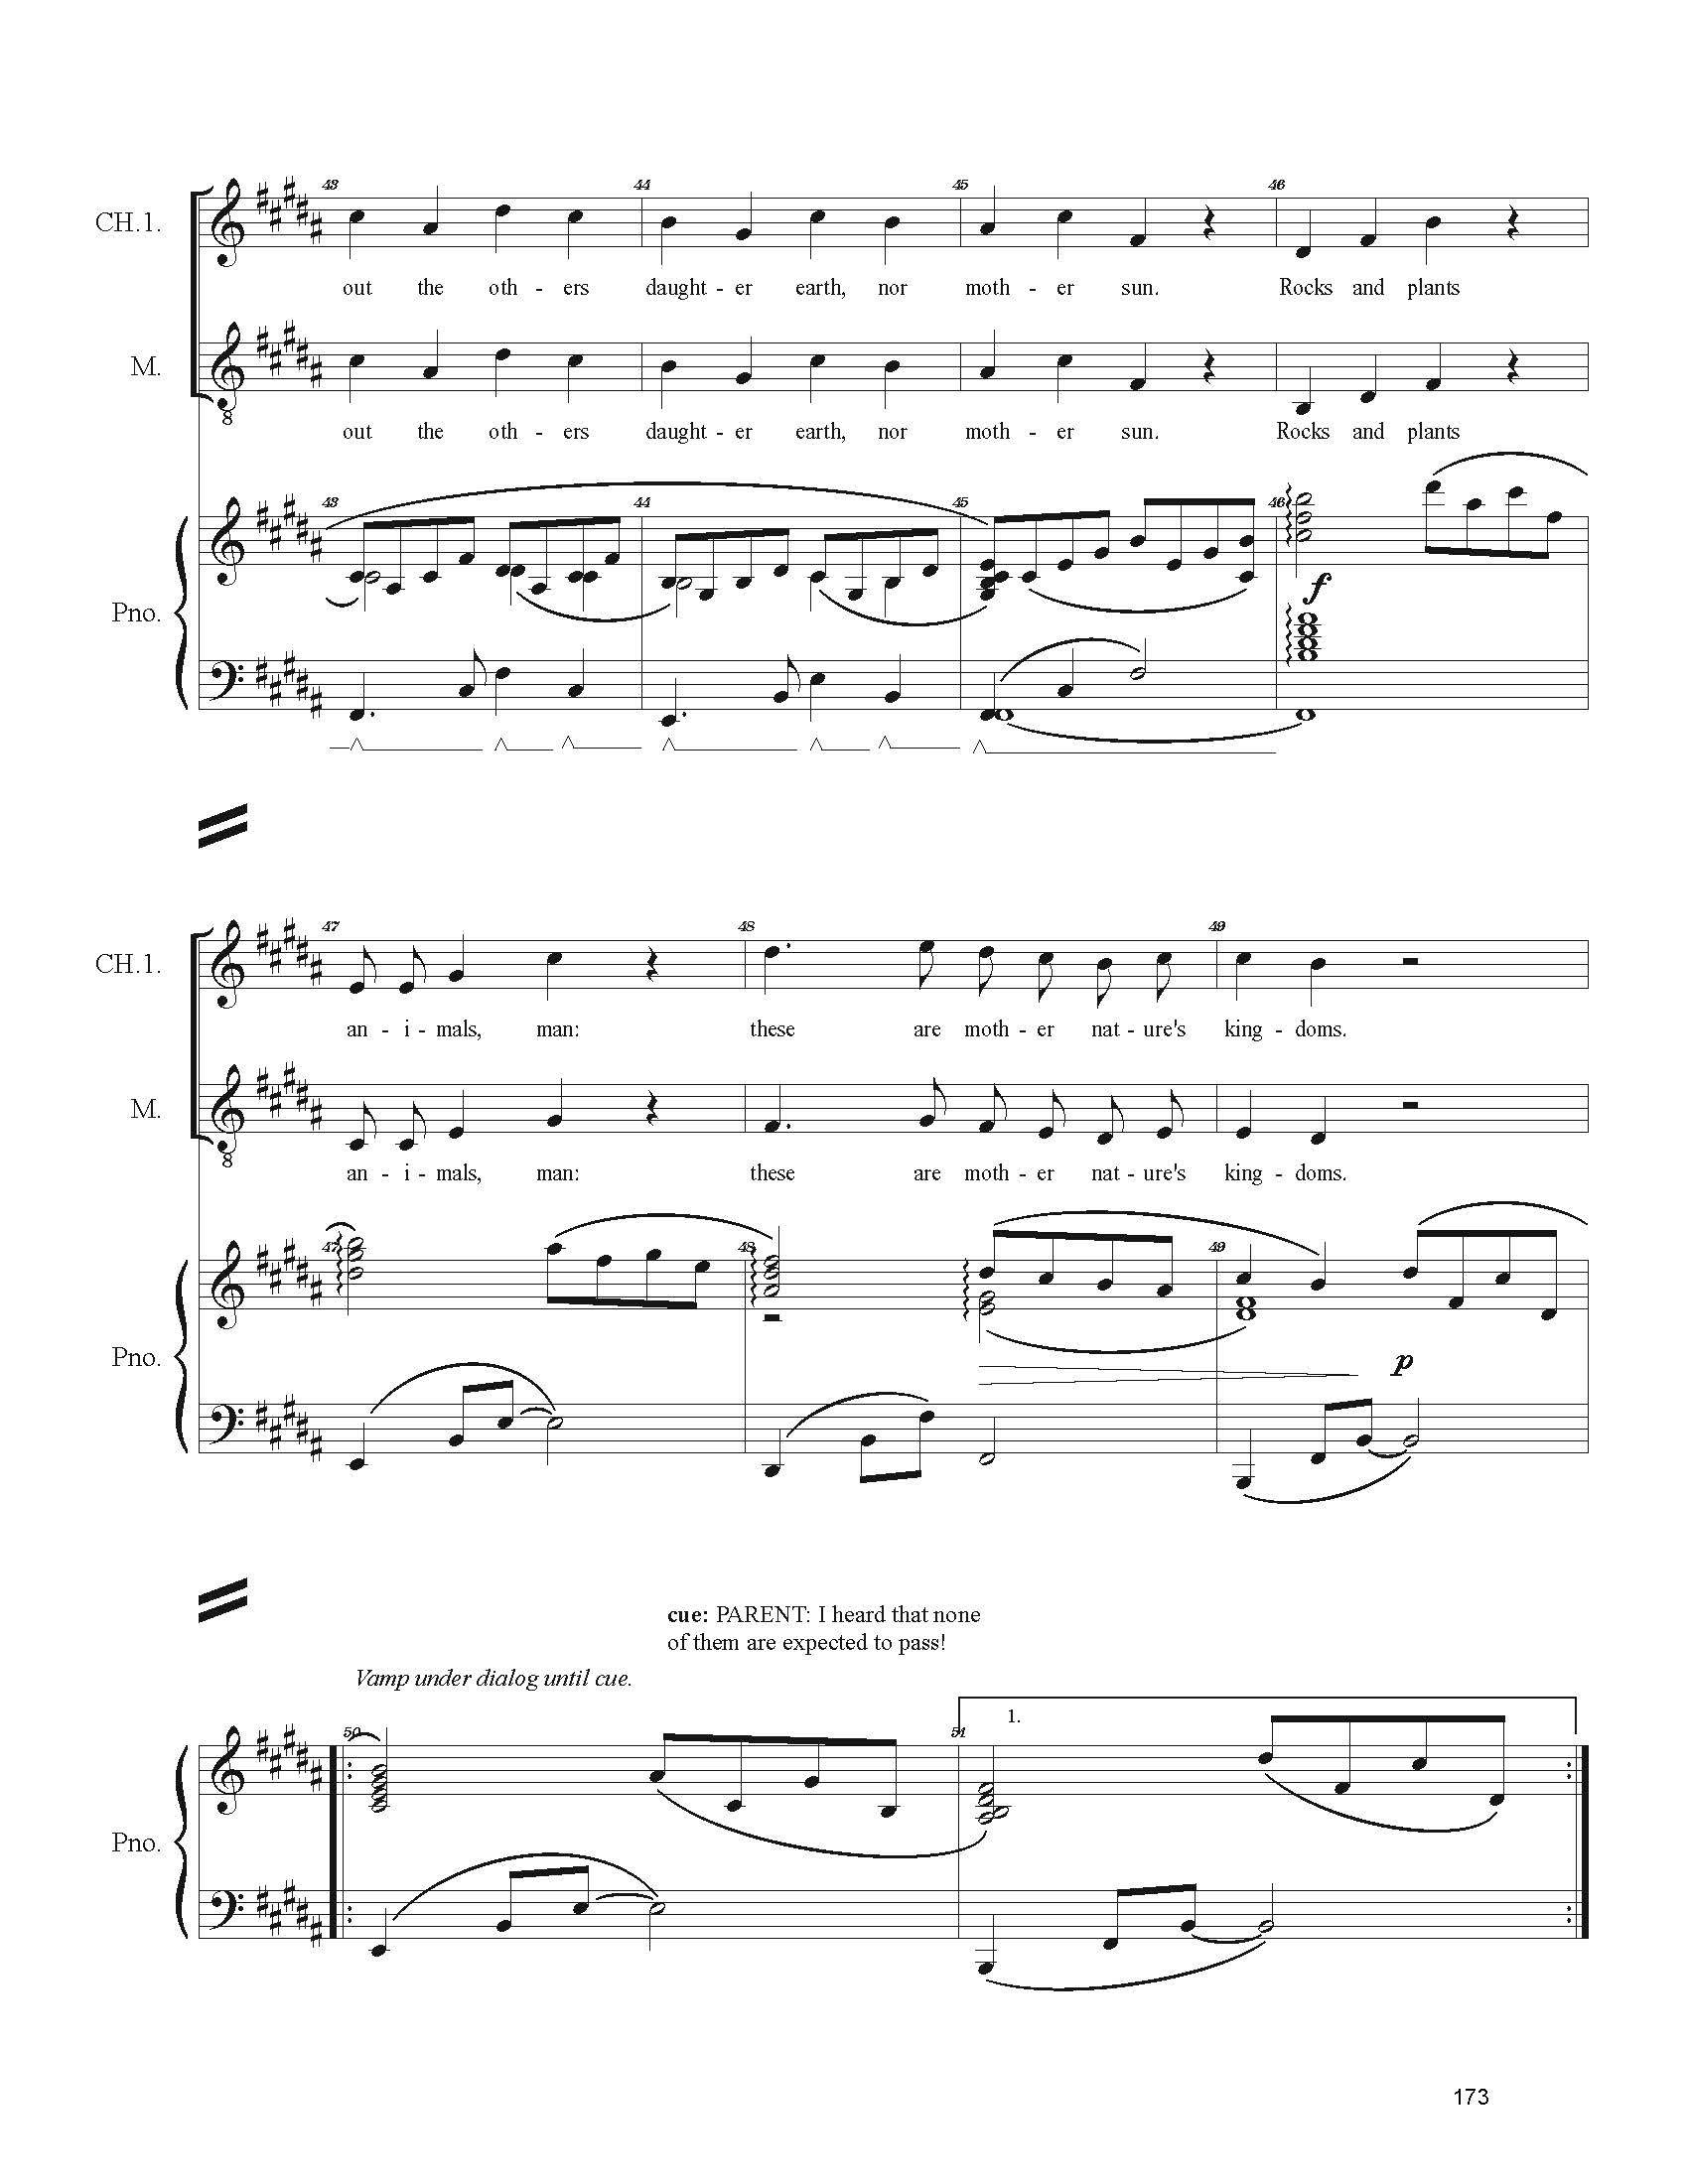 FULL PIANO VOCAL SCORE DRAFT 1 - Score_Page_173.jpg